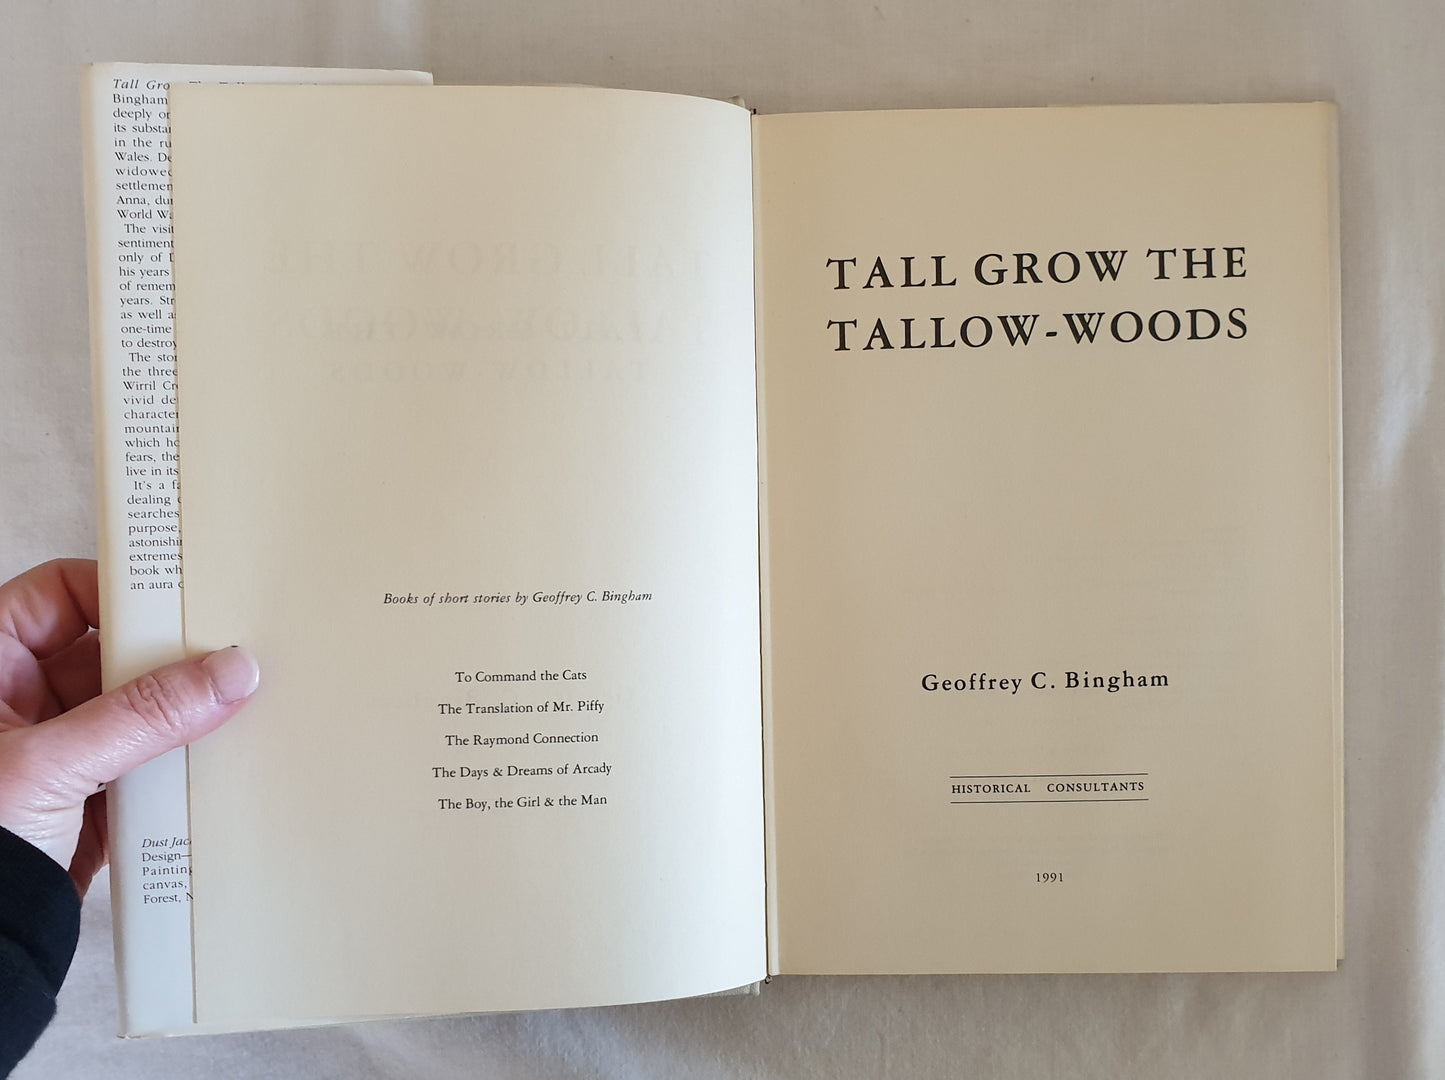 Tall Grow the Tallow-Woods by Geoffrey C. Bingham